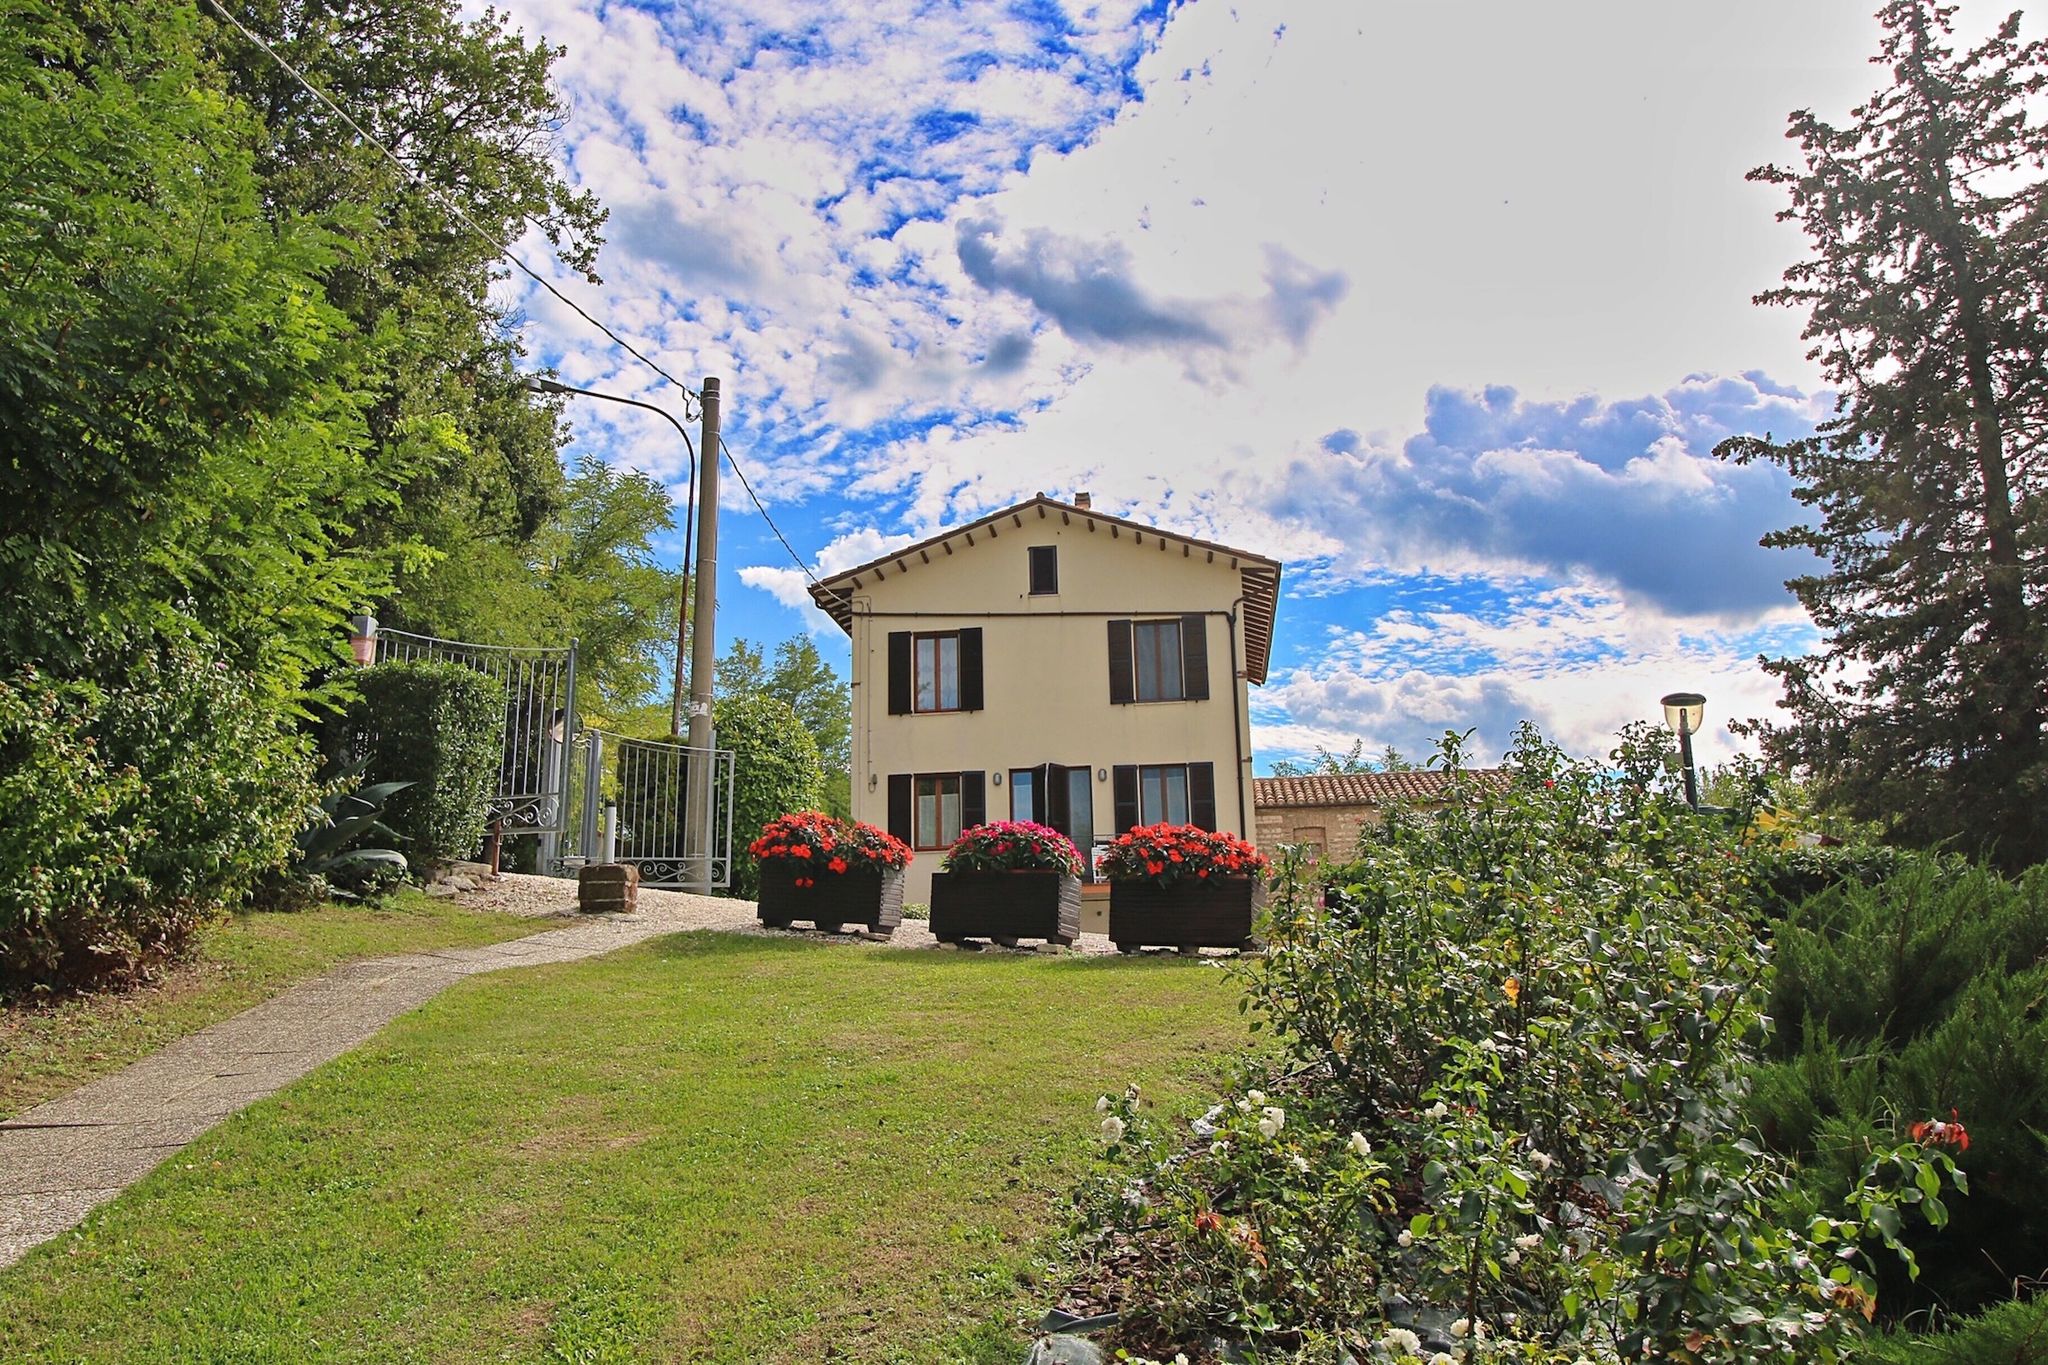 Villa in Piticchio with Swimming Pool, Garden, BBQ, Terrace